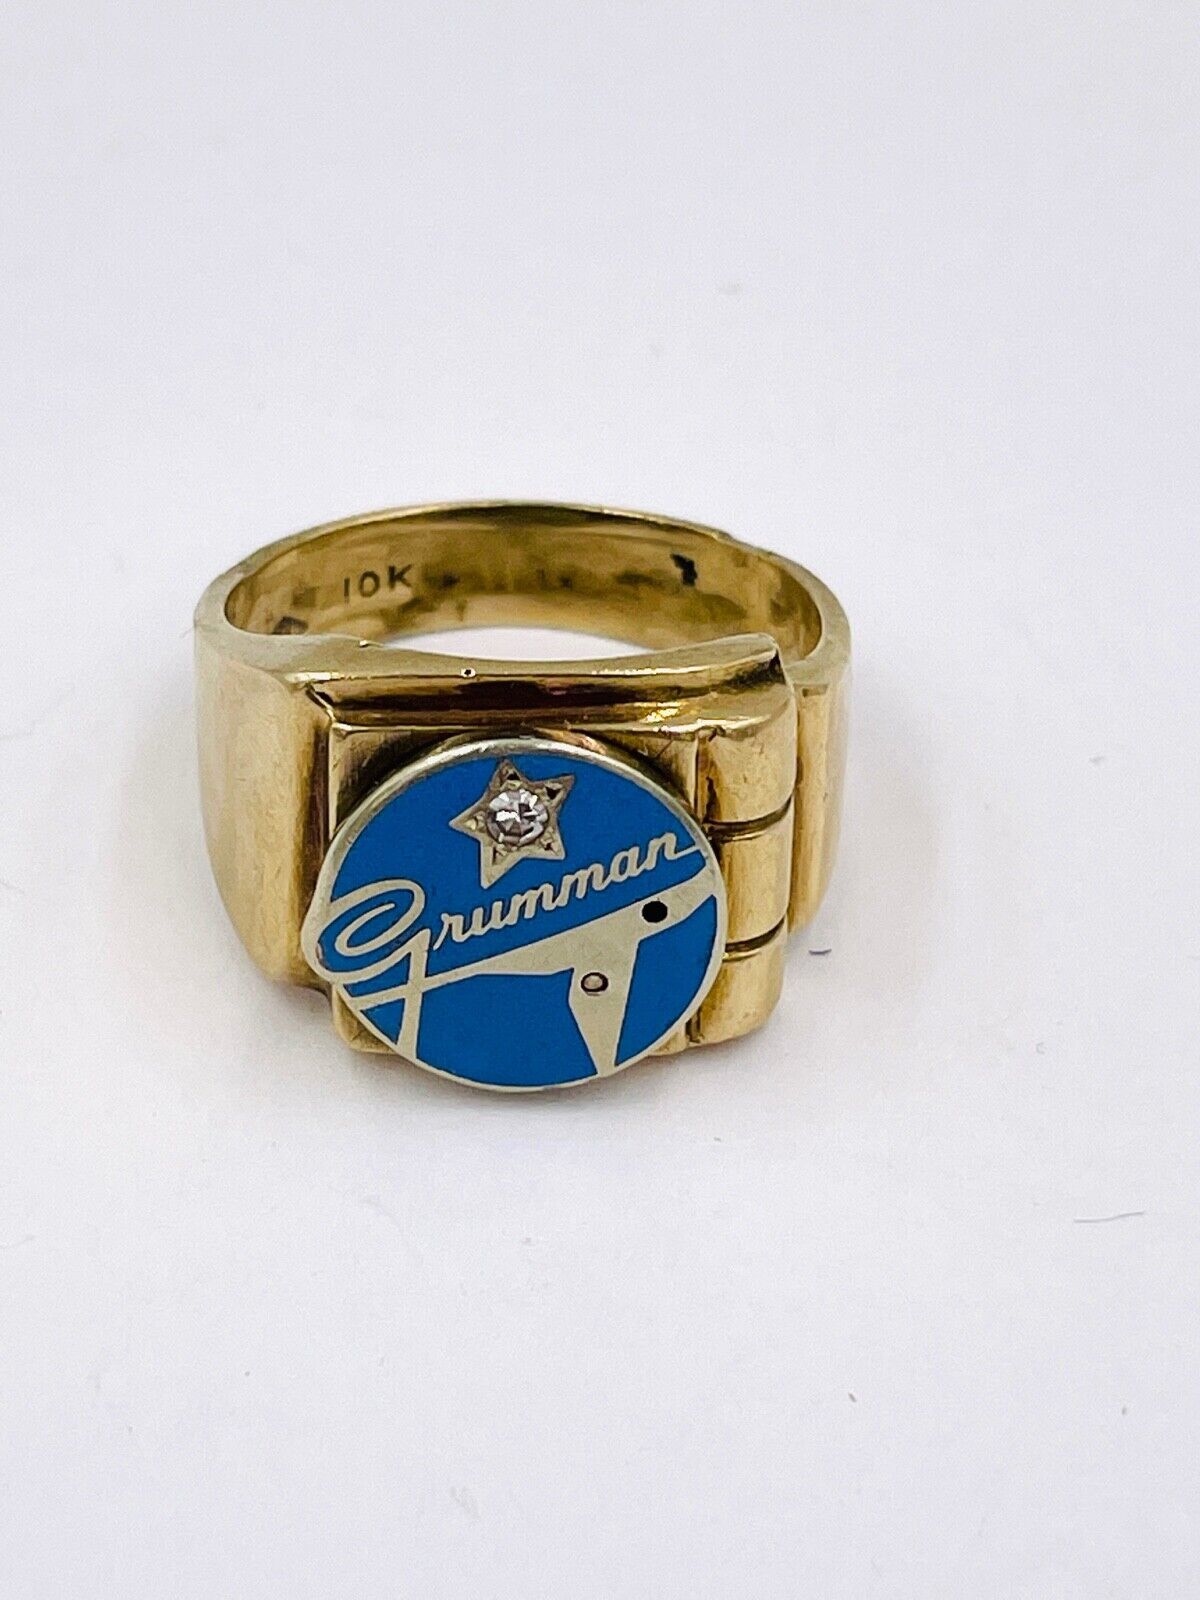 Grumman Aviation with Diamond 10k yellow gold ring 9sz